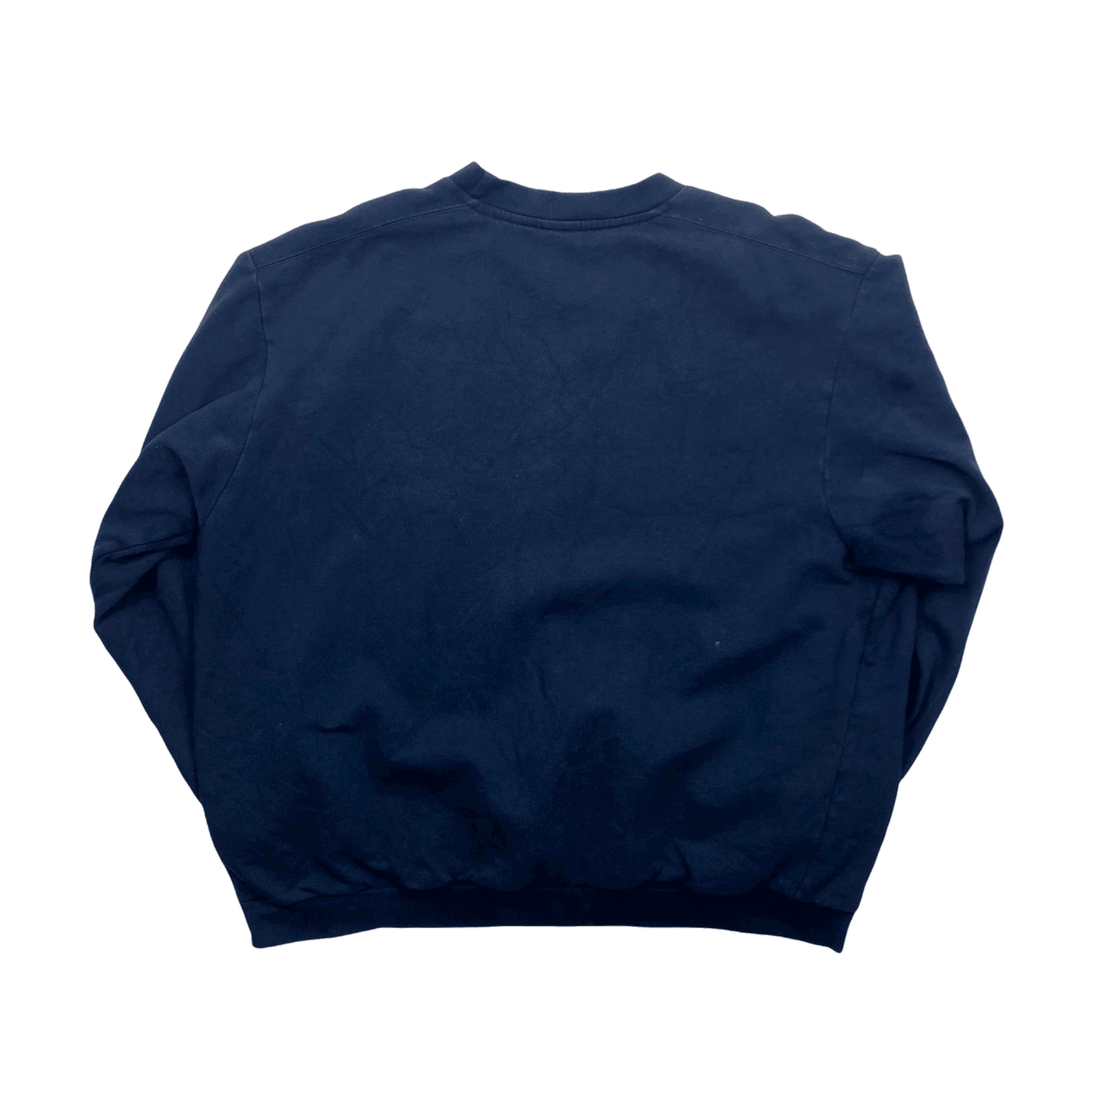 Vintage 90s Navy Blue Nike Spell-Out Sweatshirt - Extra Large - The Streetwear Studio